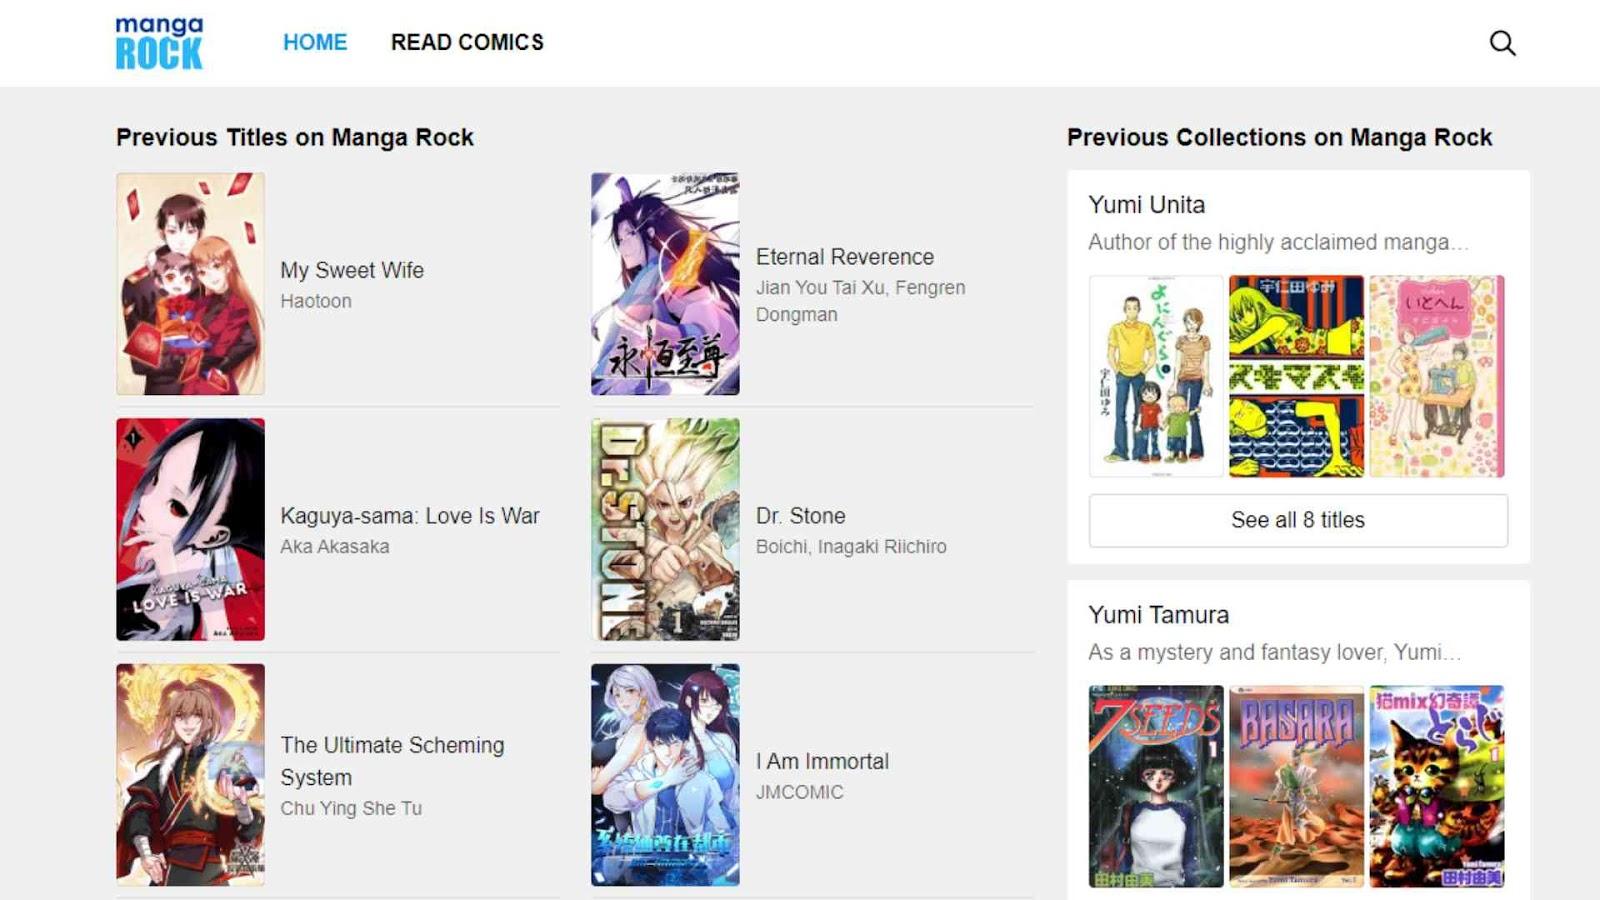 Manga Rock para Android - Download